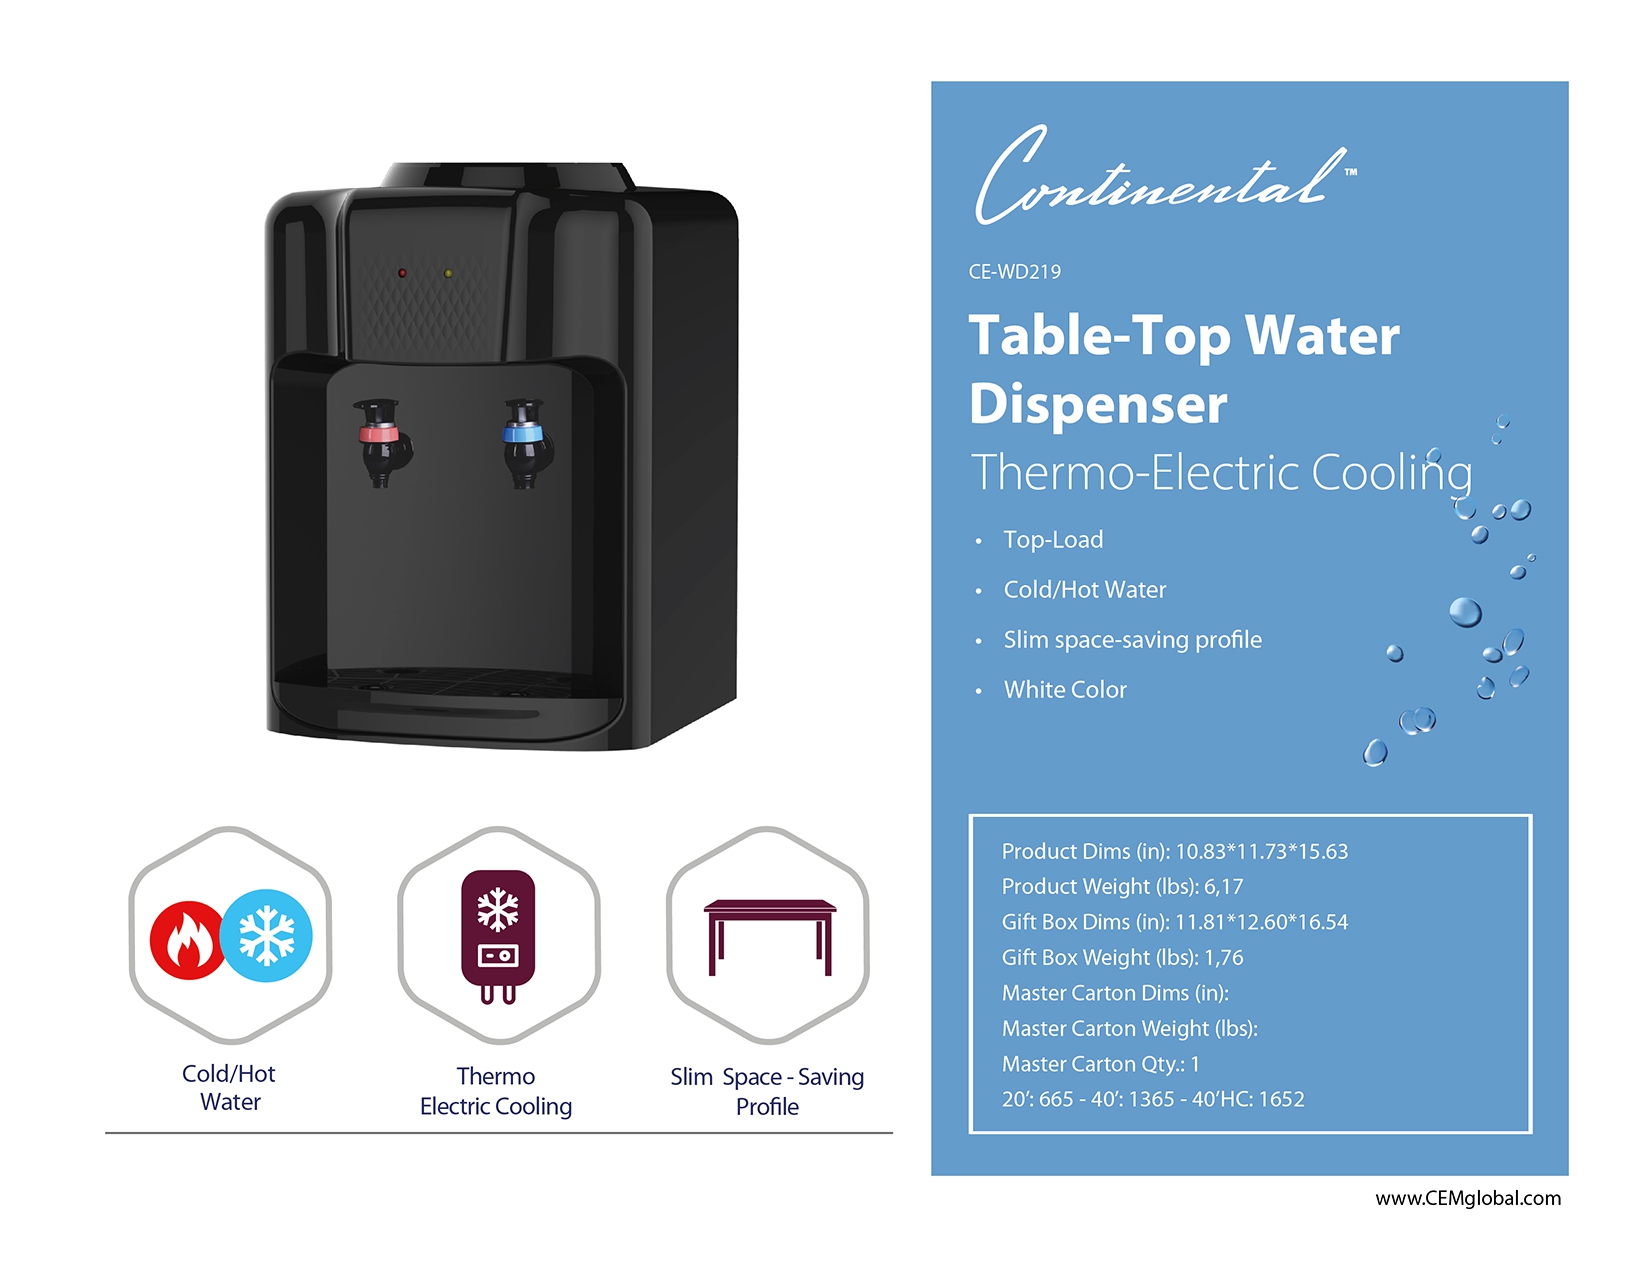 Table-top Water Dispenser